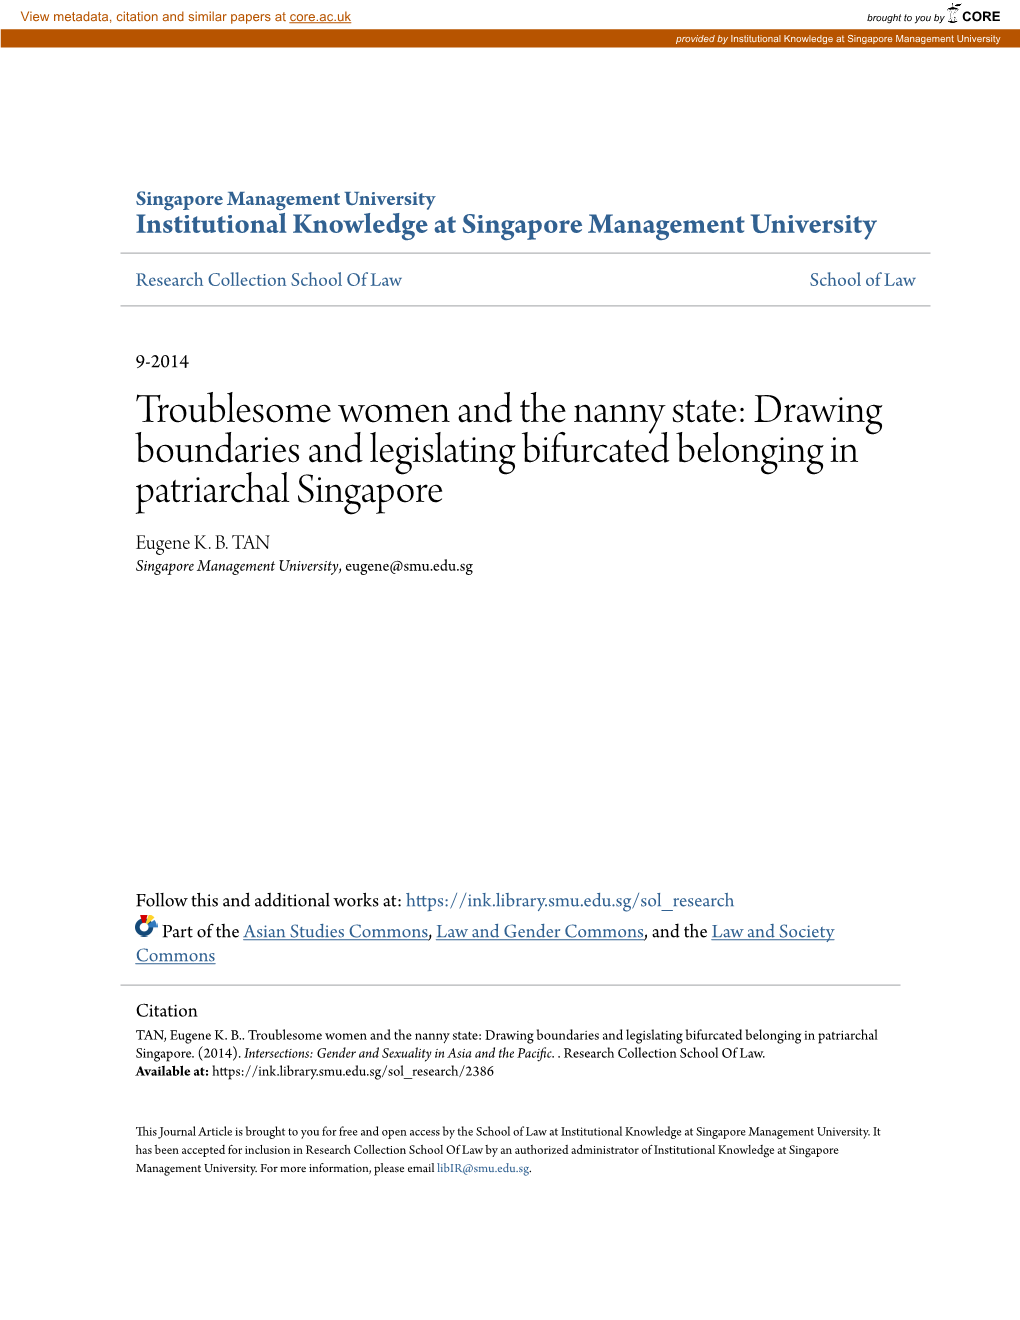 Drawing Boundaries and Legislating Bifurcated Belonging in Patriarchal Singapore Eugene K